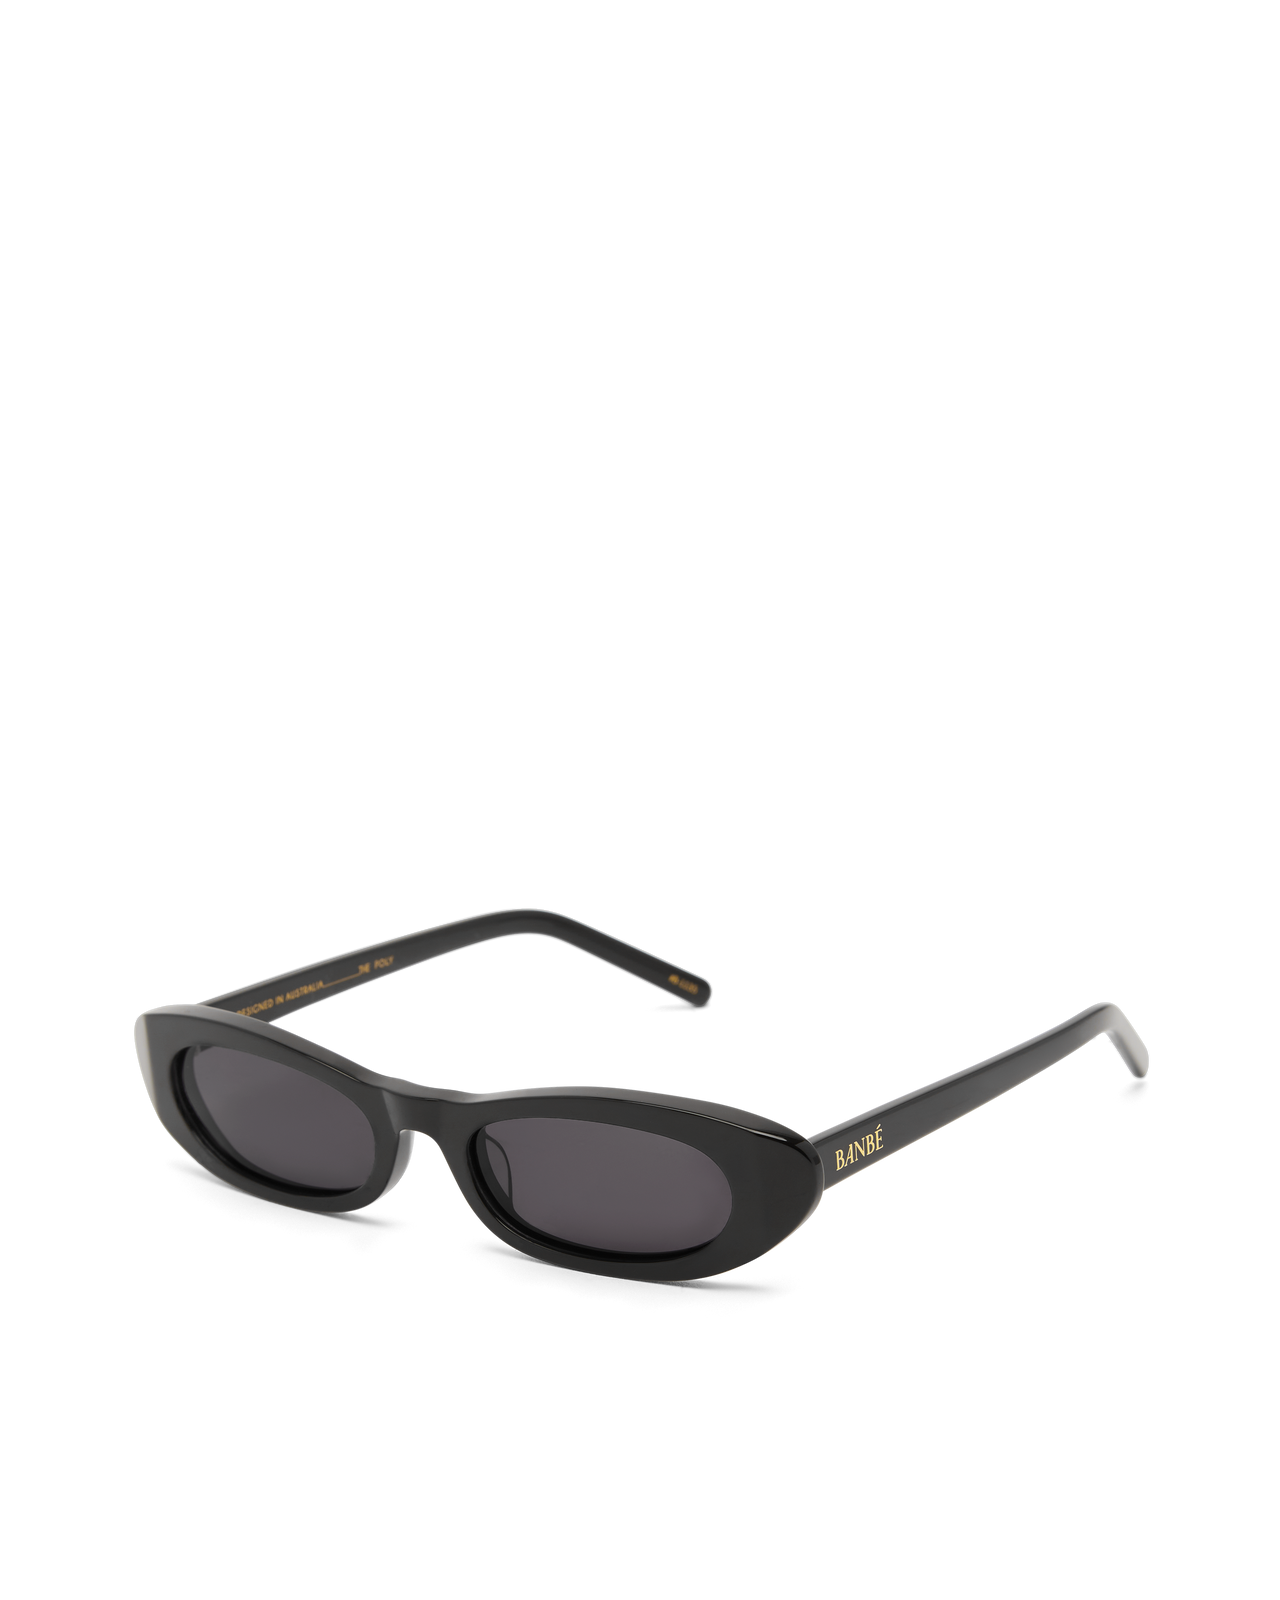 The Poly Sunglasses Black Jet, Sunglass Acc by Banbe | LIT Boutique